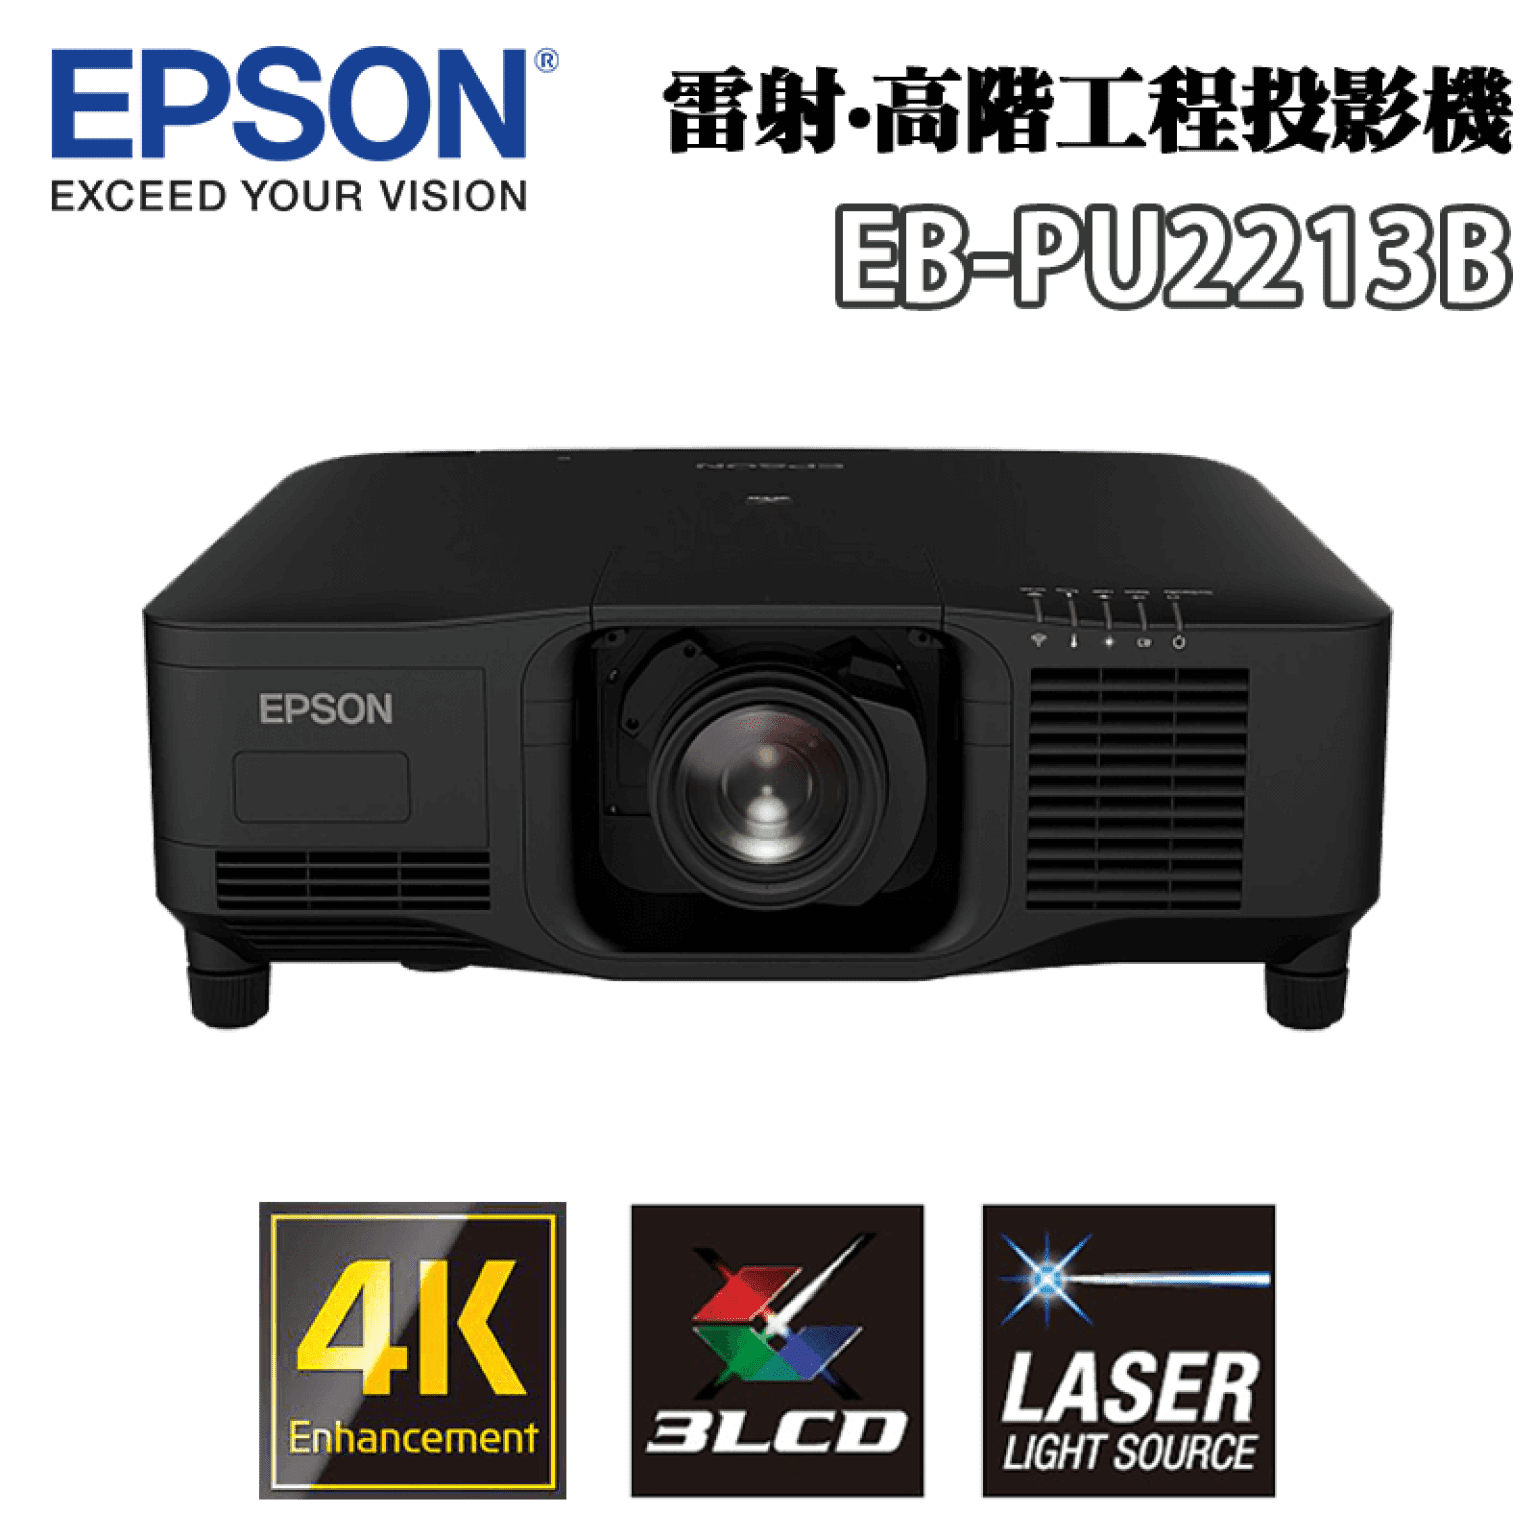 EPSON-EB-PU2213B-Main-1536x1536.png